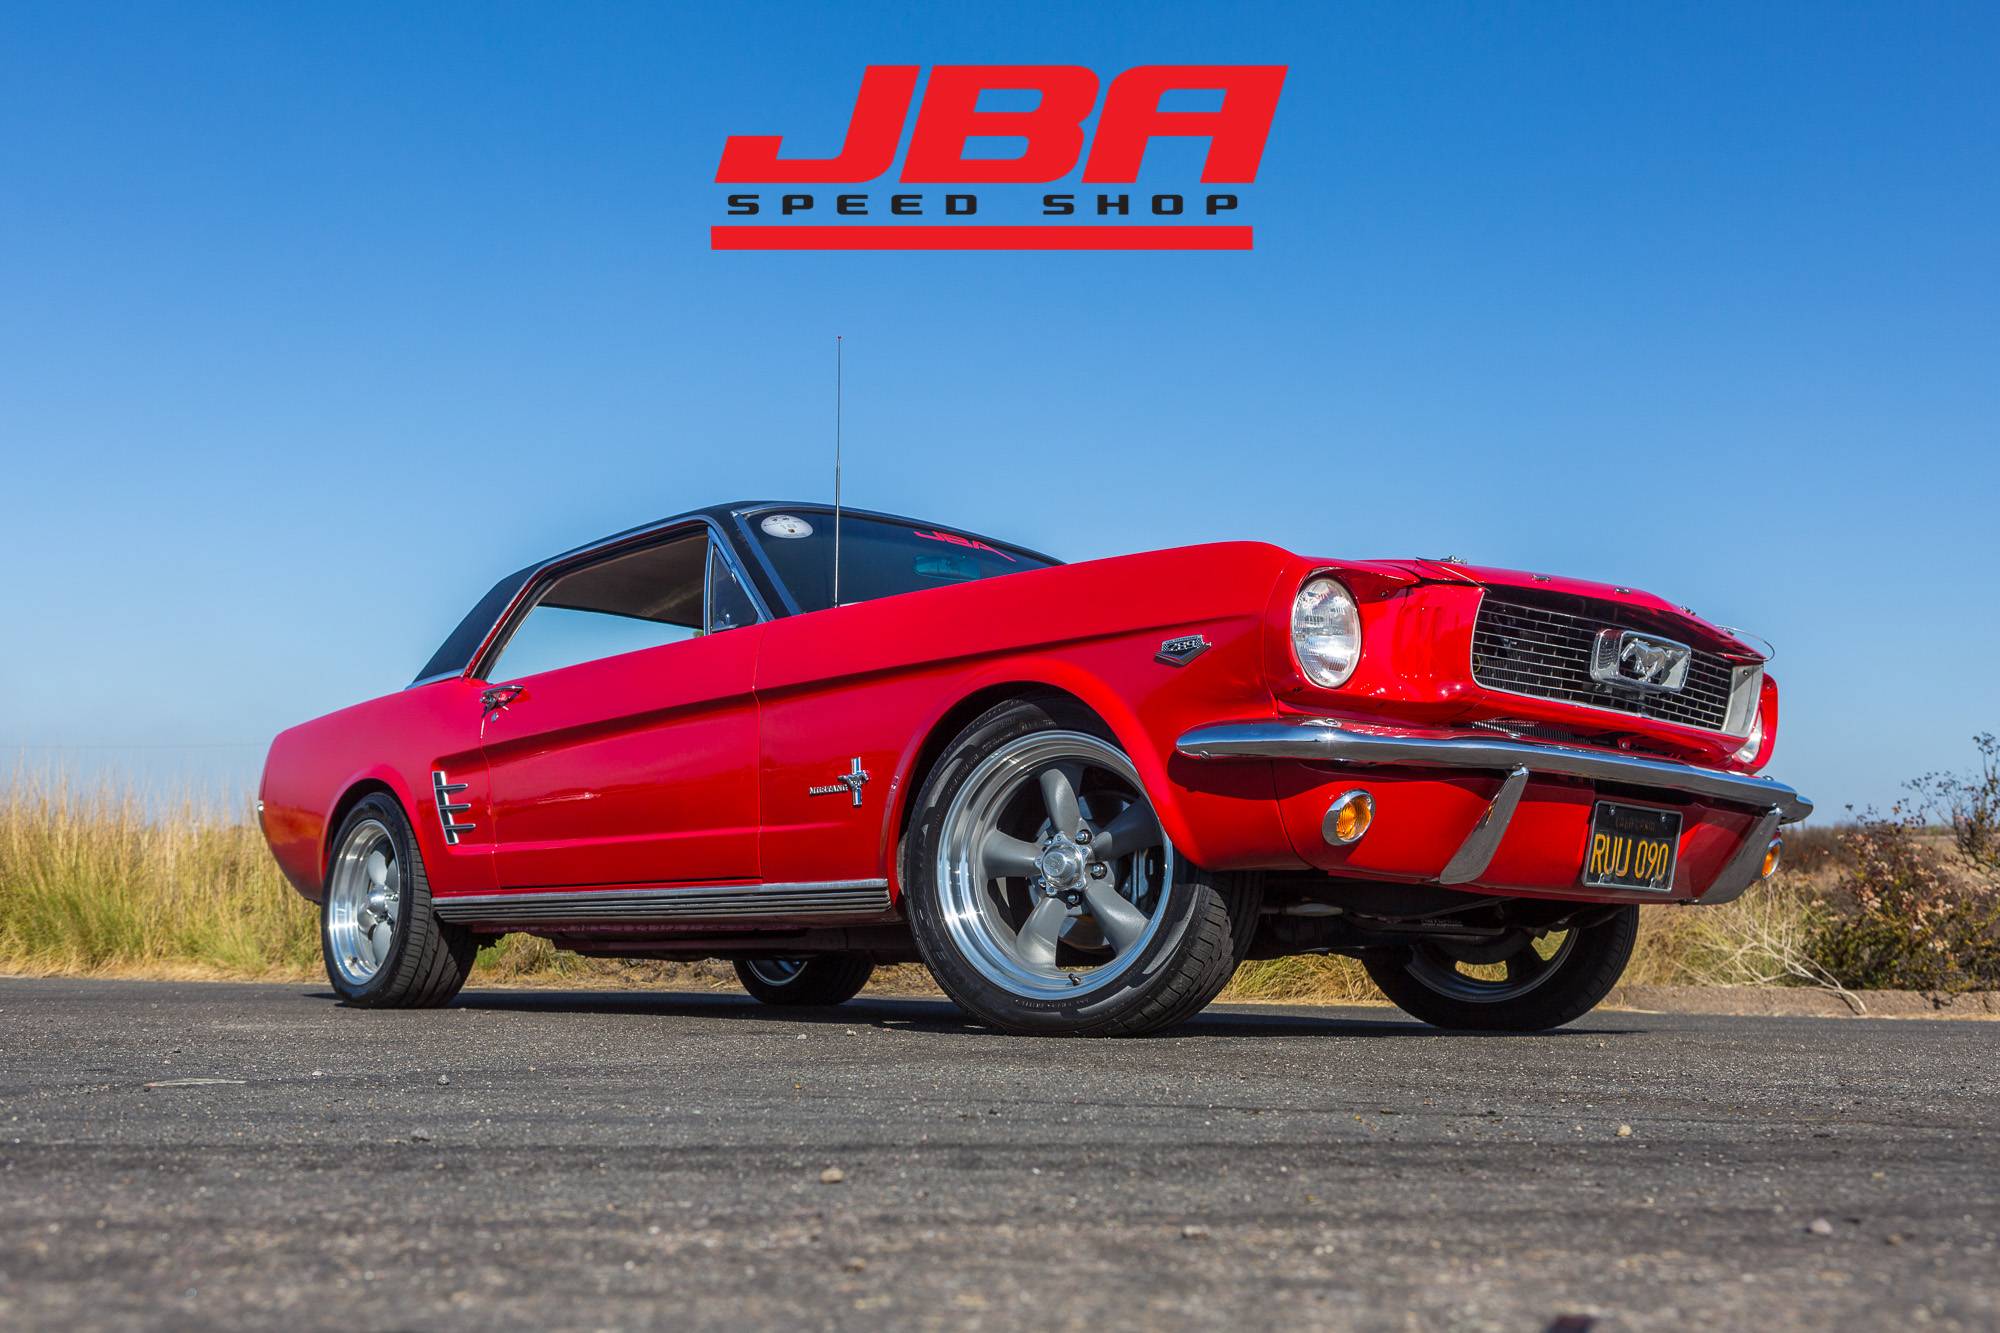 1966 Mustang Coupe, full rebuild, vinyl top, red, American Racing wheels, Toyo Tires, Disk Brakes, Full Restoration.